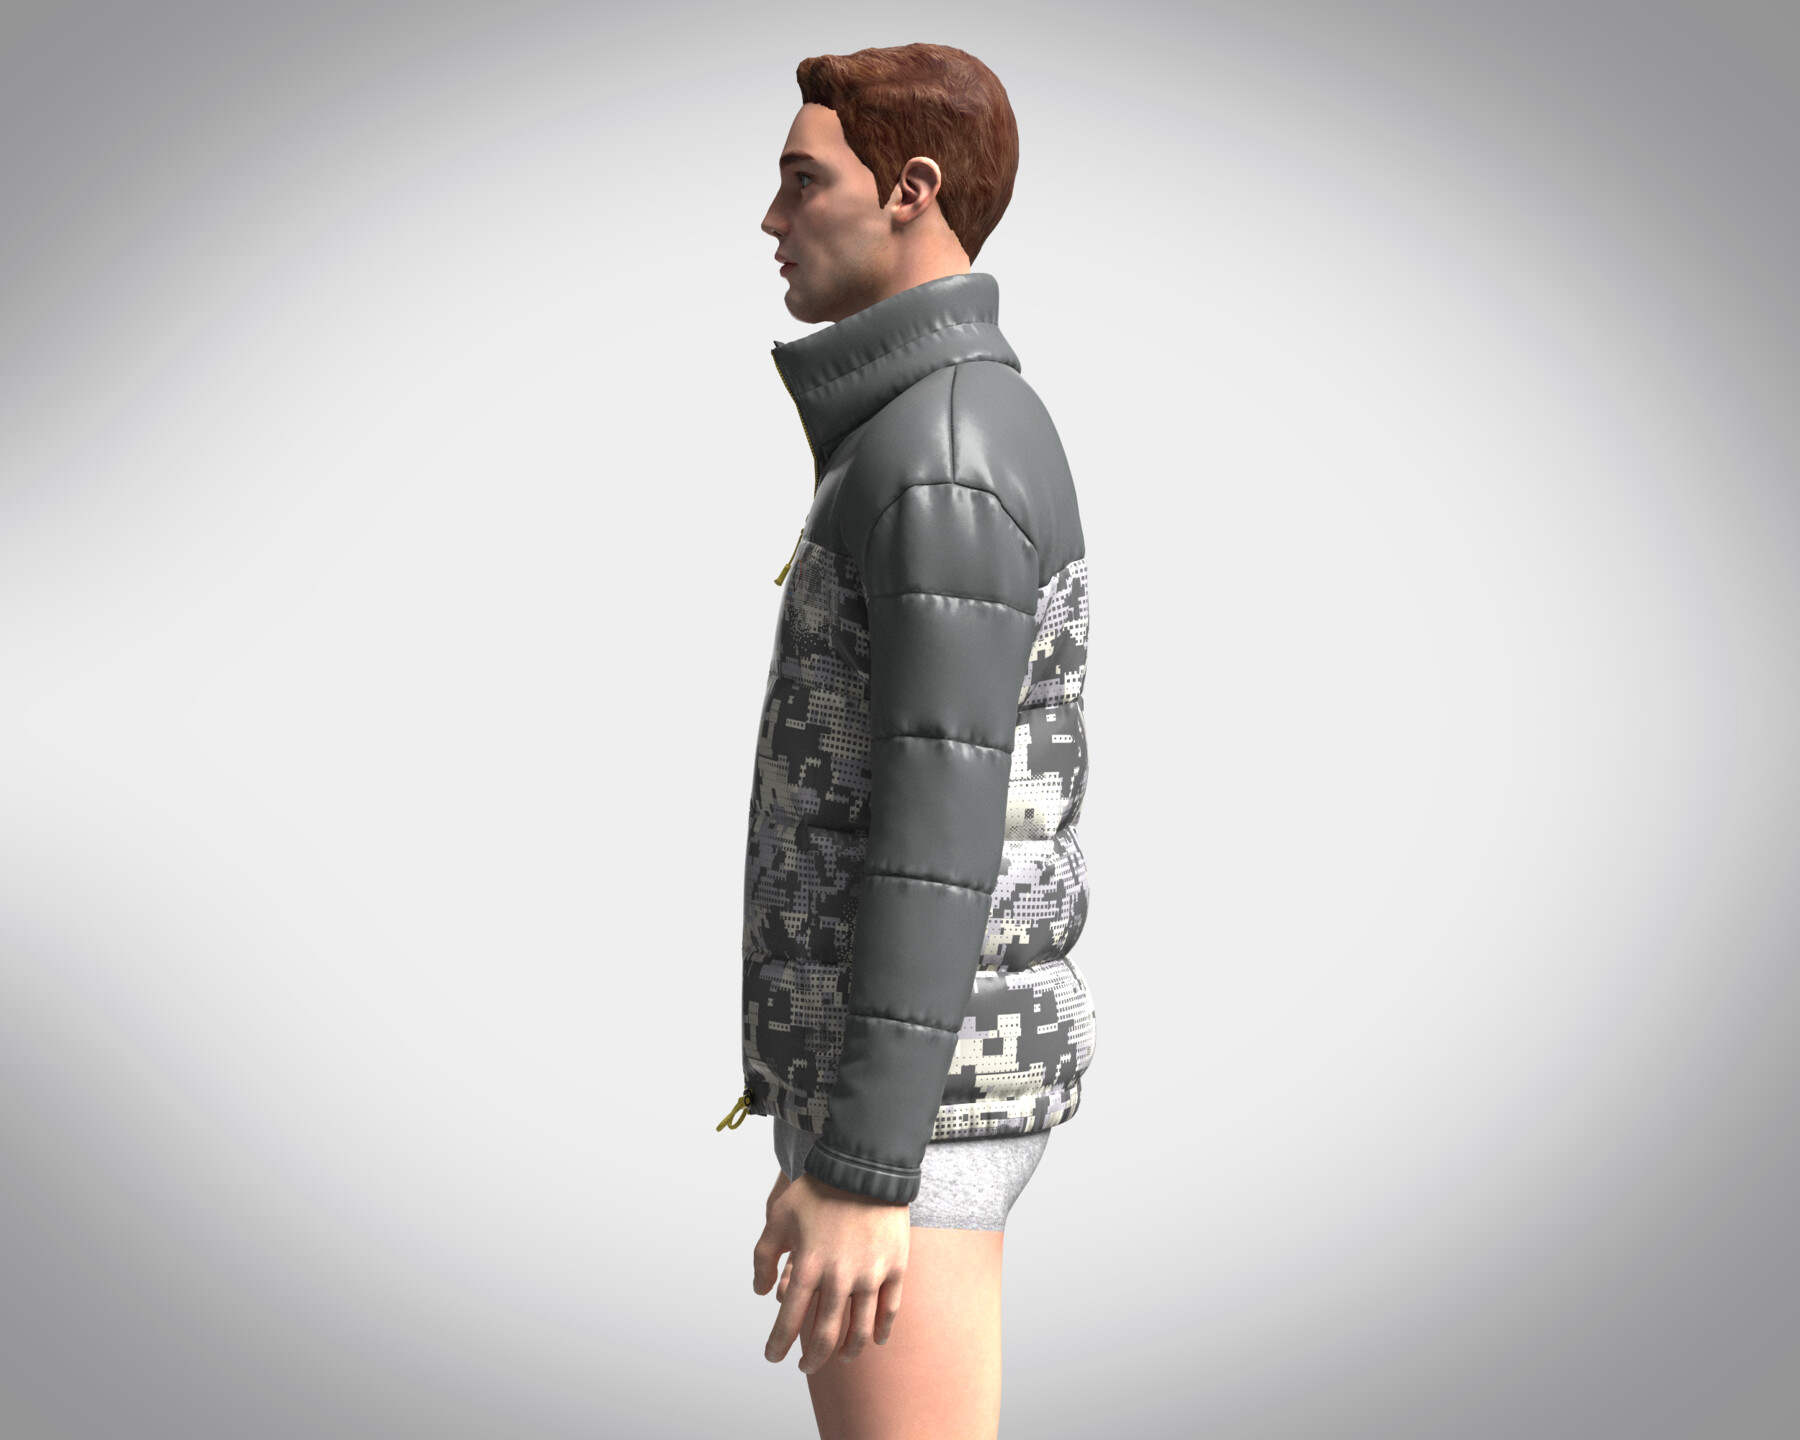 ArtStation - Puffer Jacket in Camo | Resources